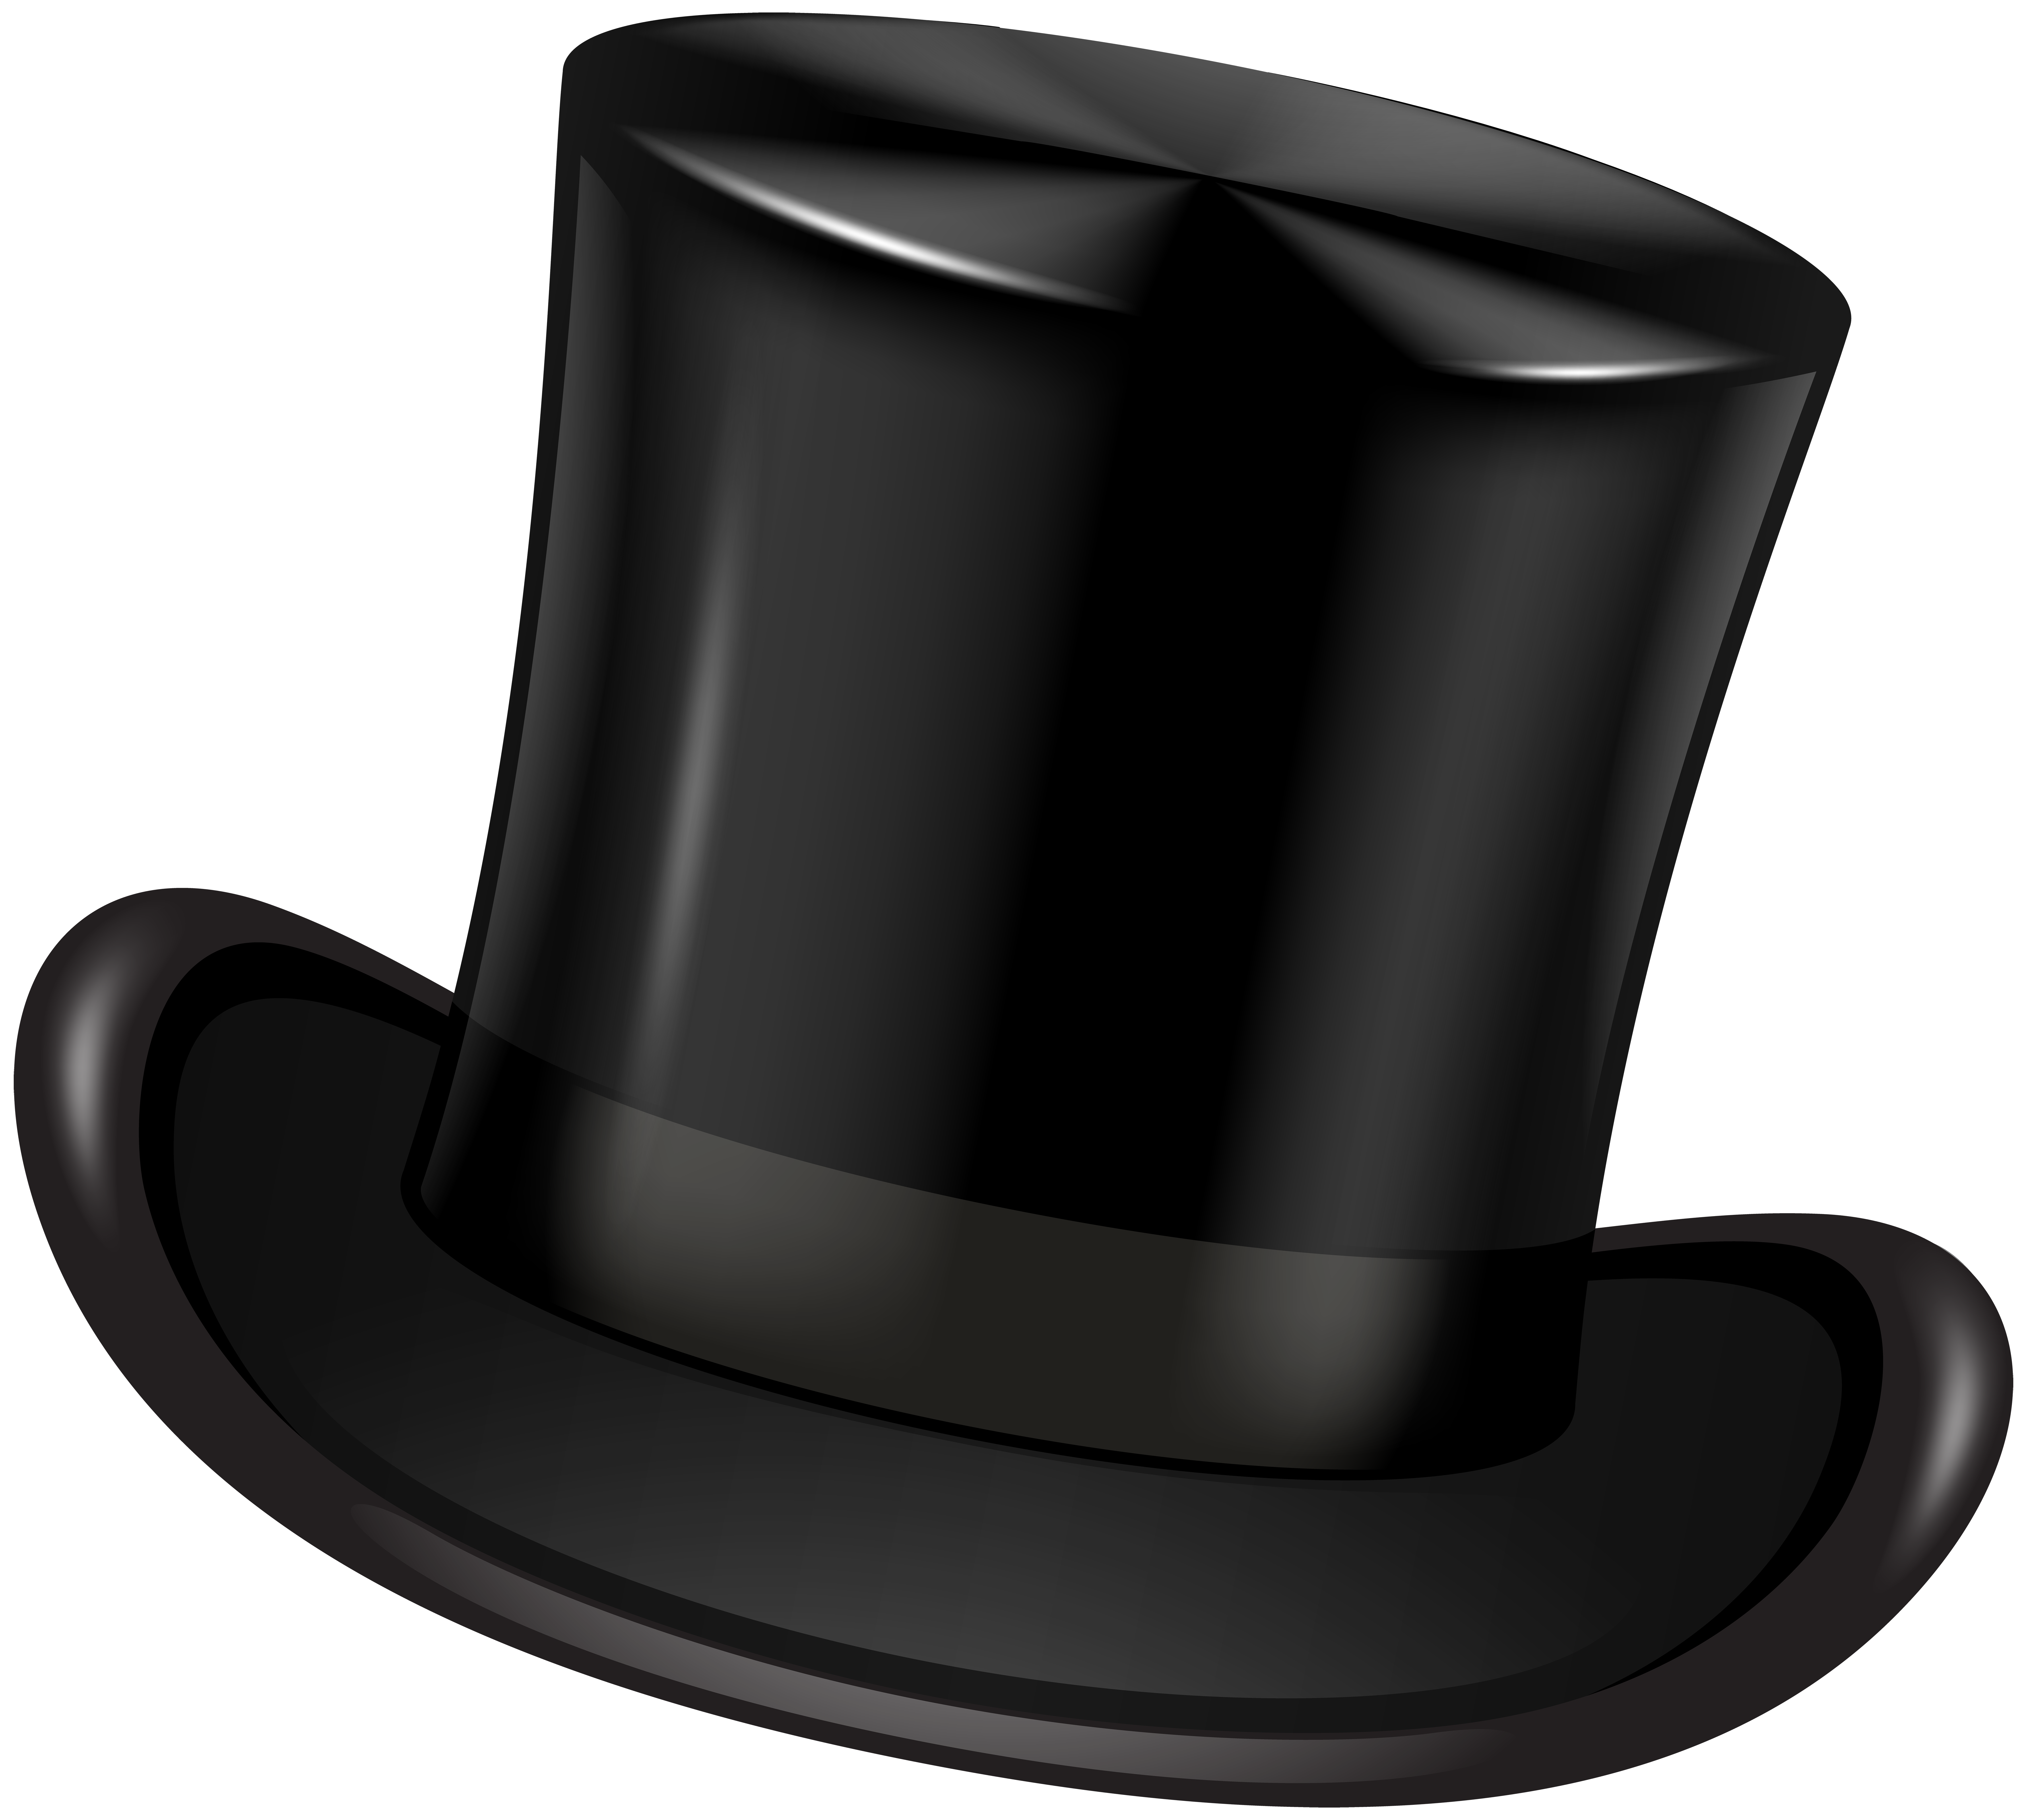 Top hat Clip art - Black Top Hat Transparent Clip Art PNG Image png ...